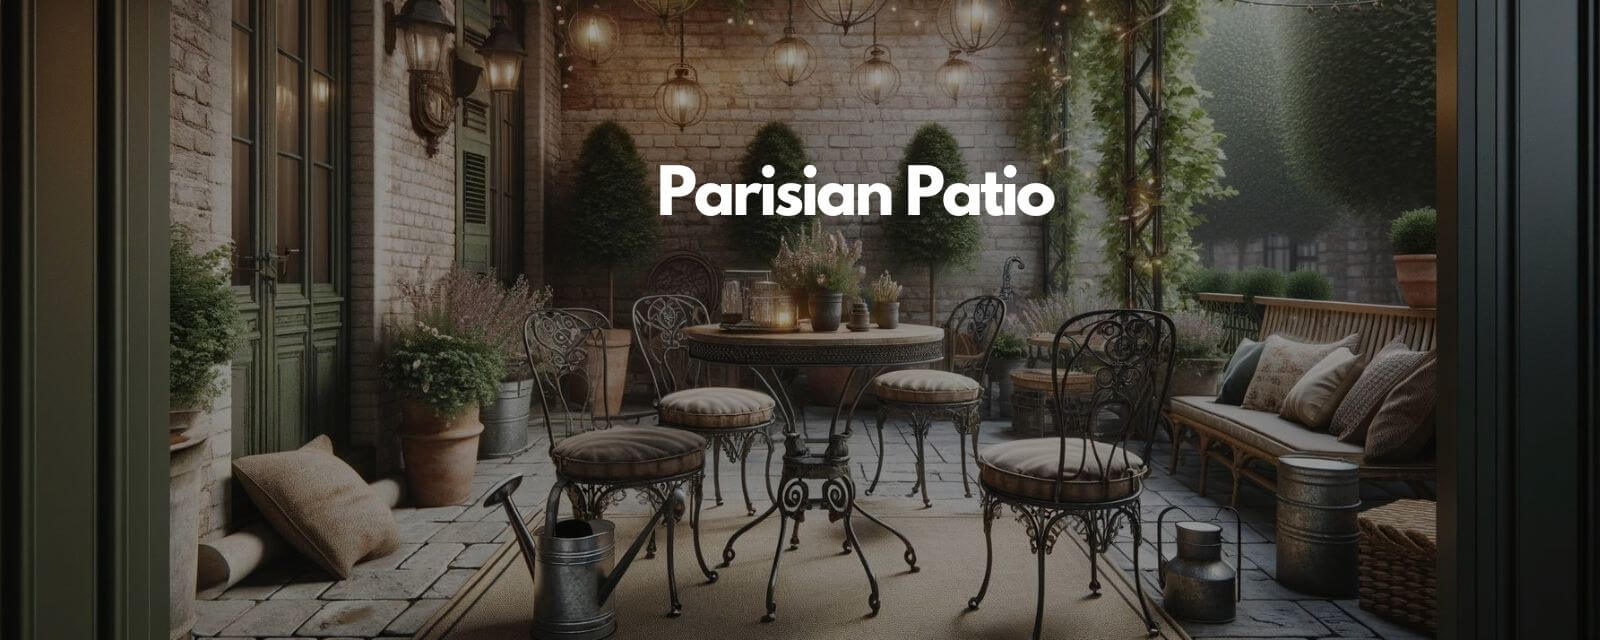 Parisian Patio